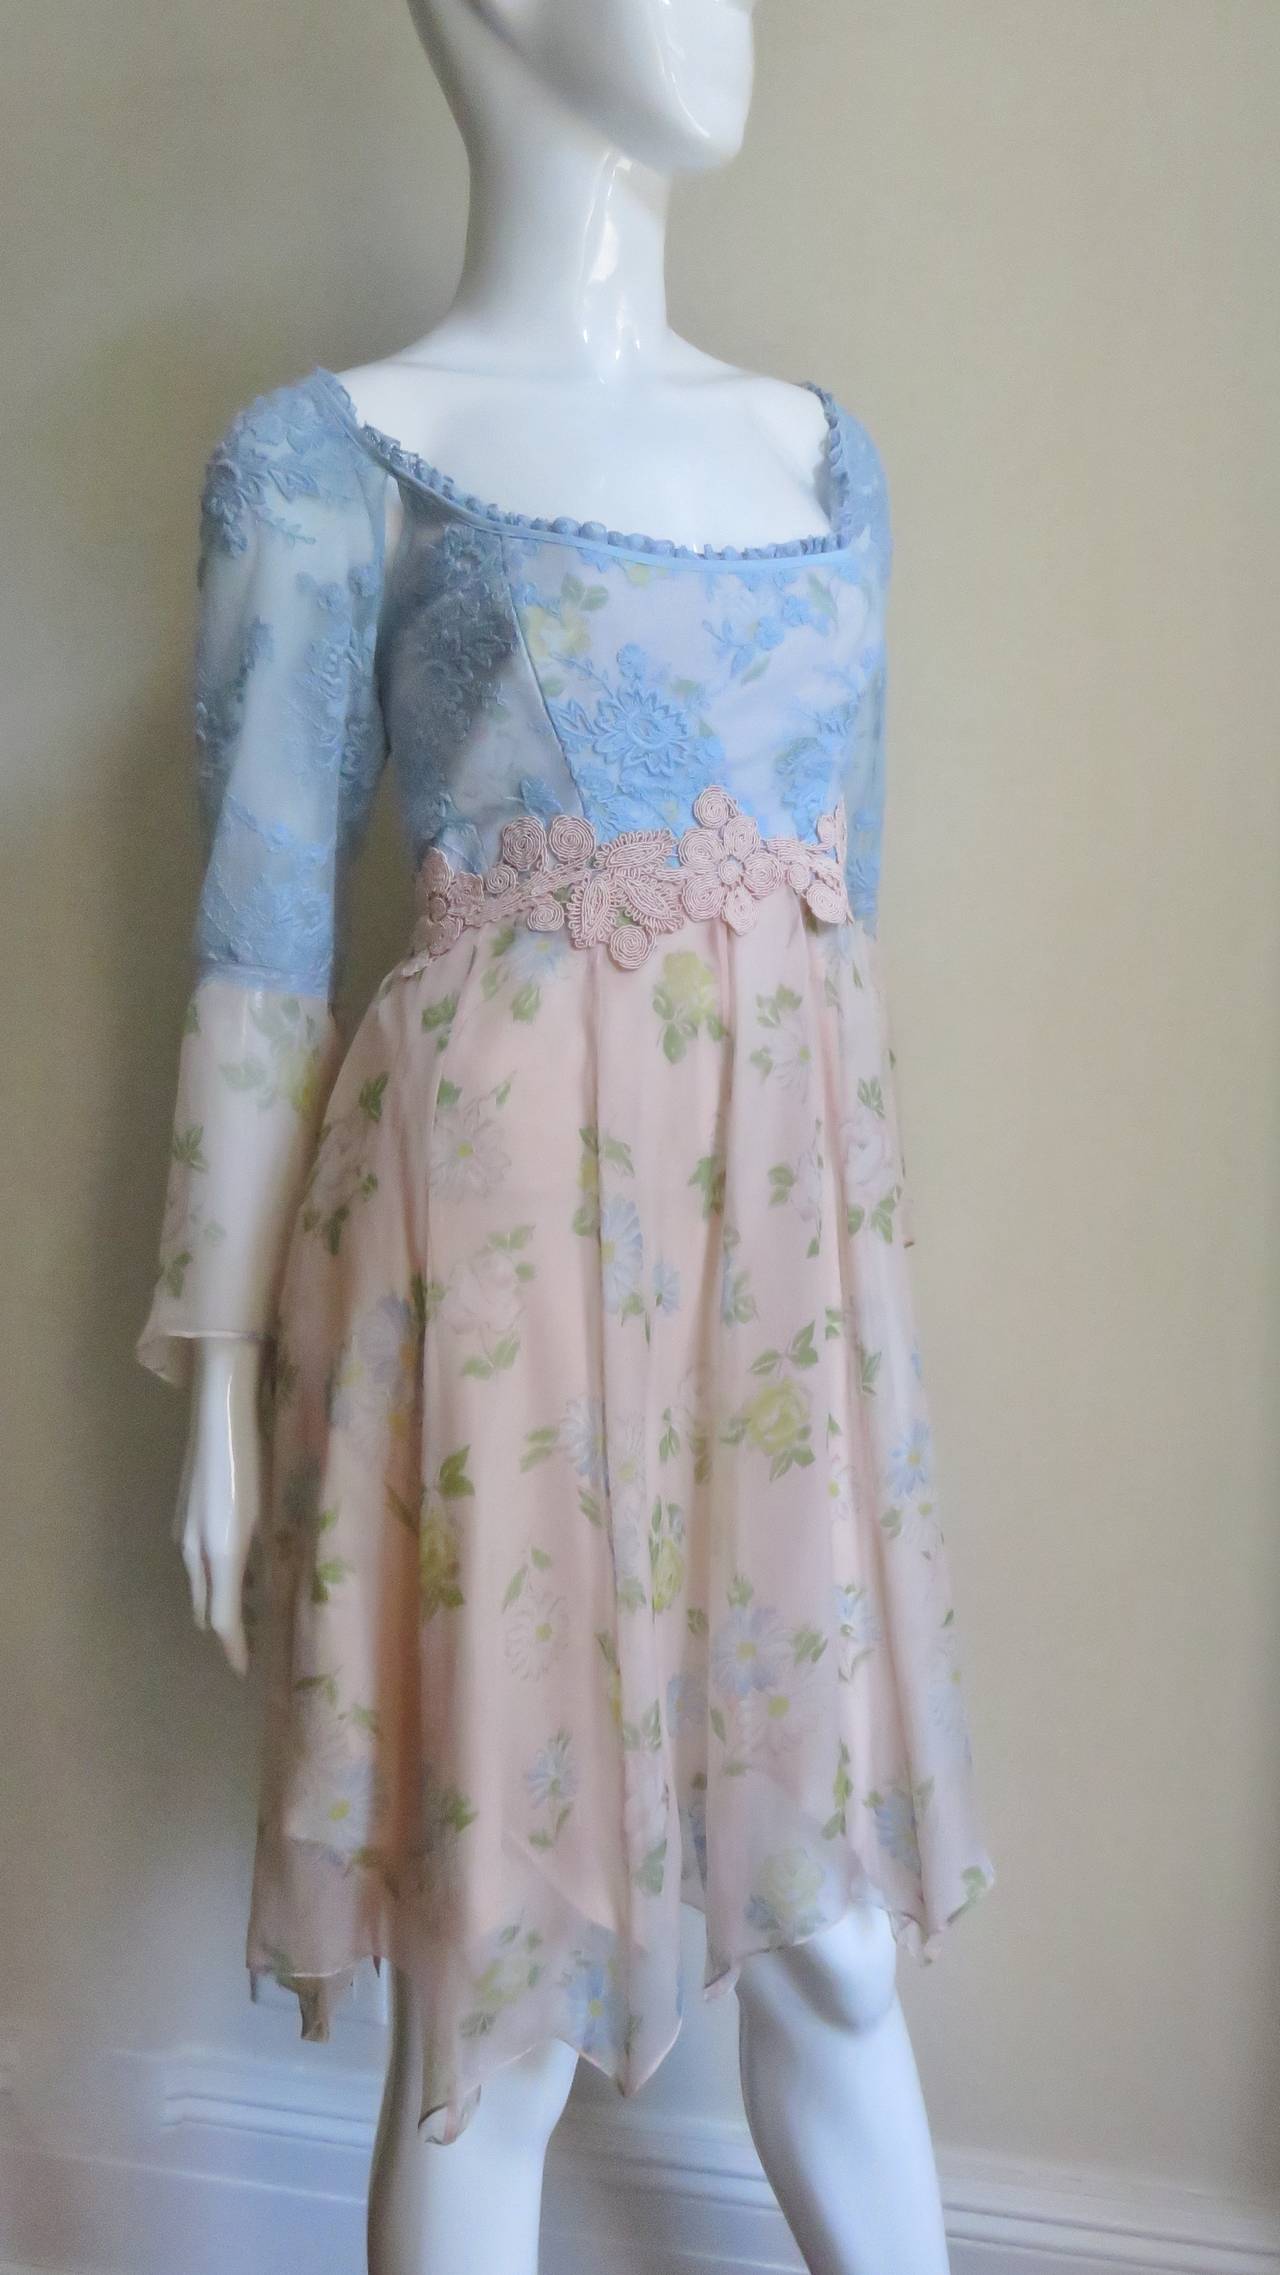 Lolita Lempicka Silk Dress with Lace 2